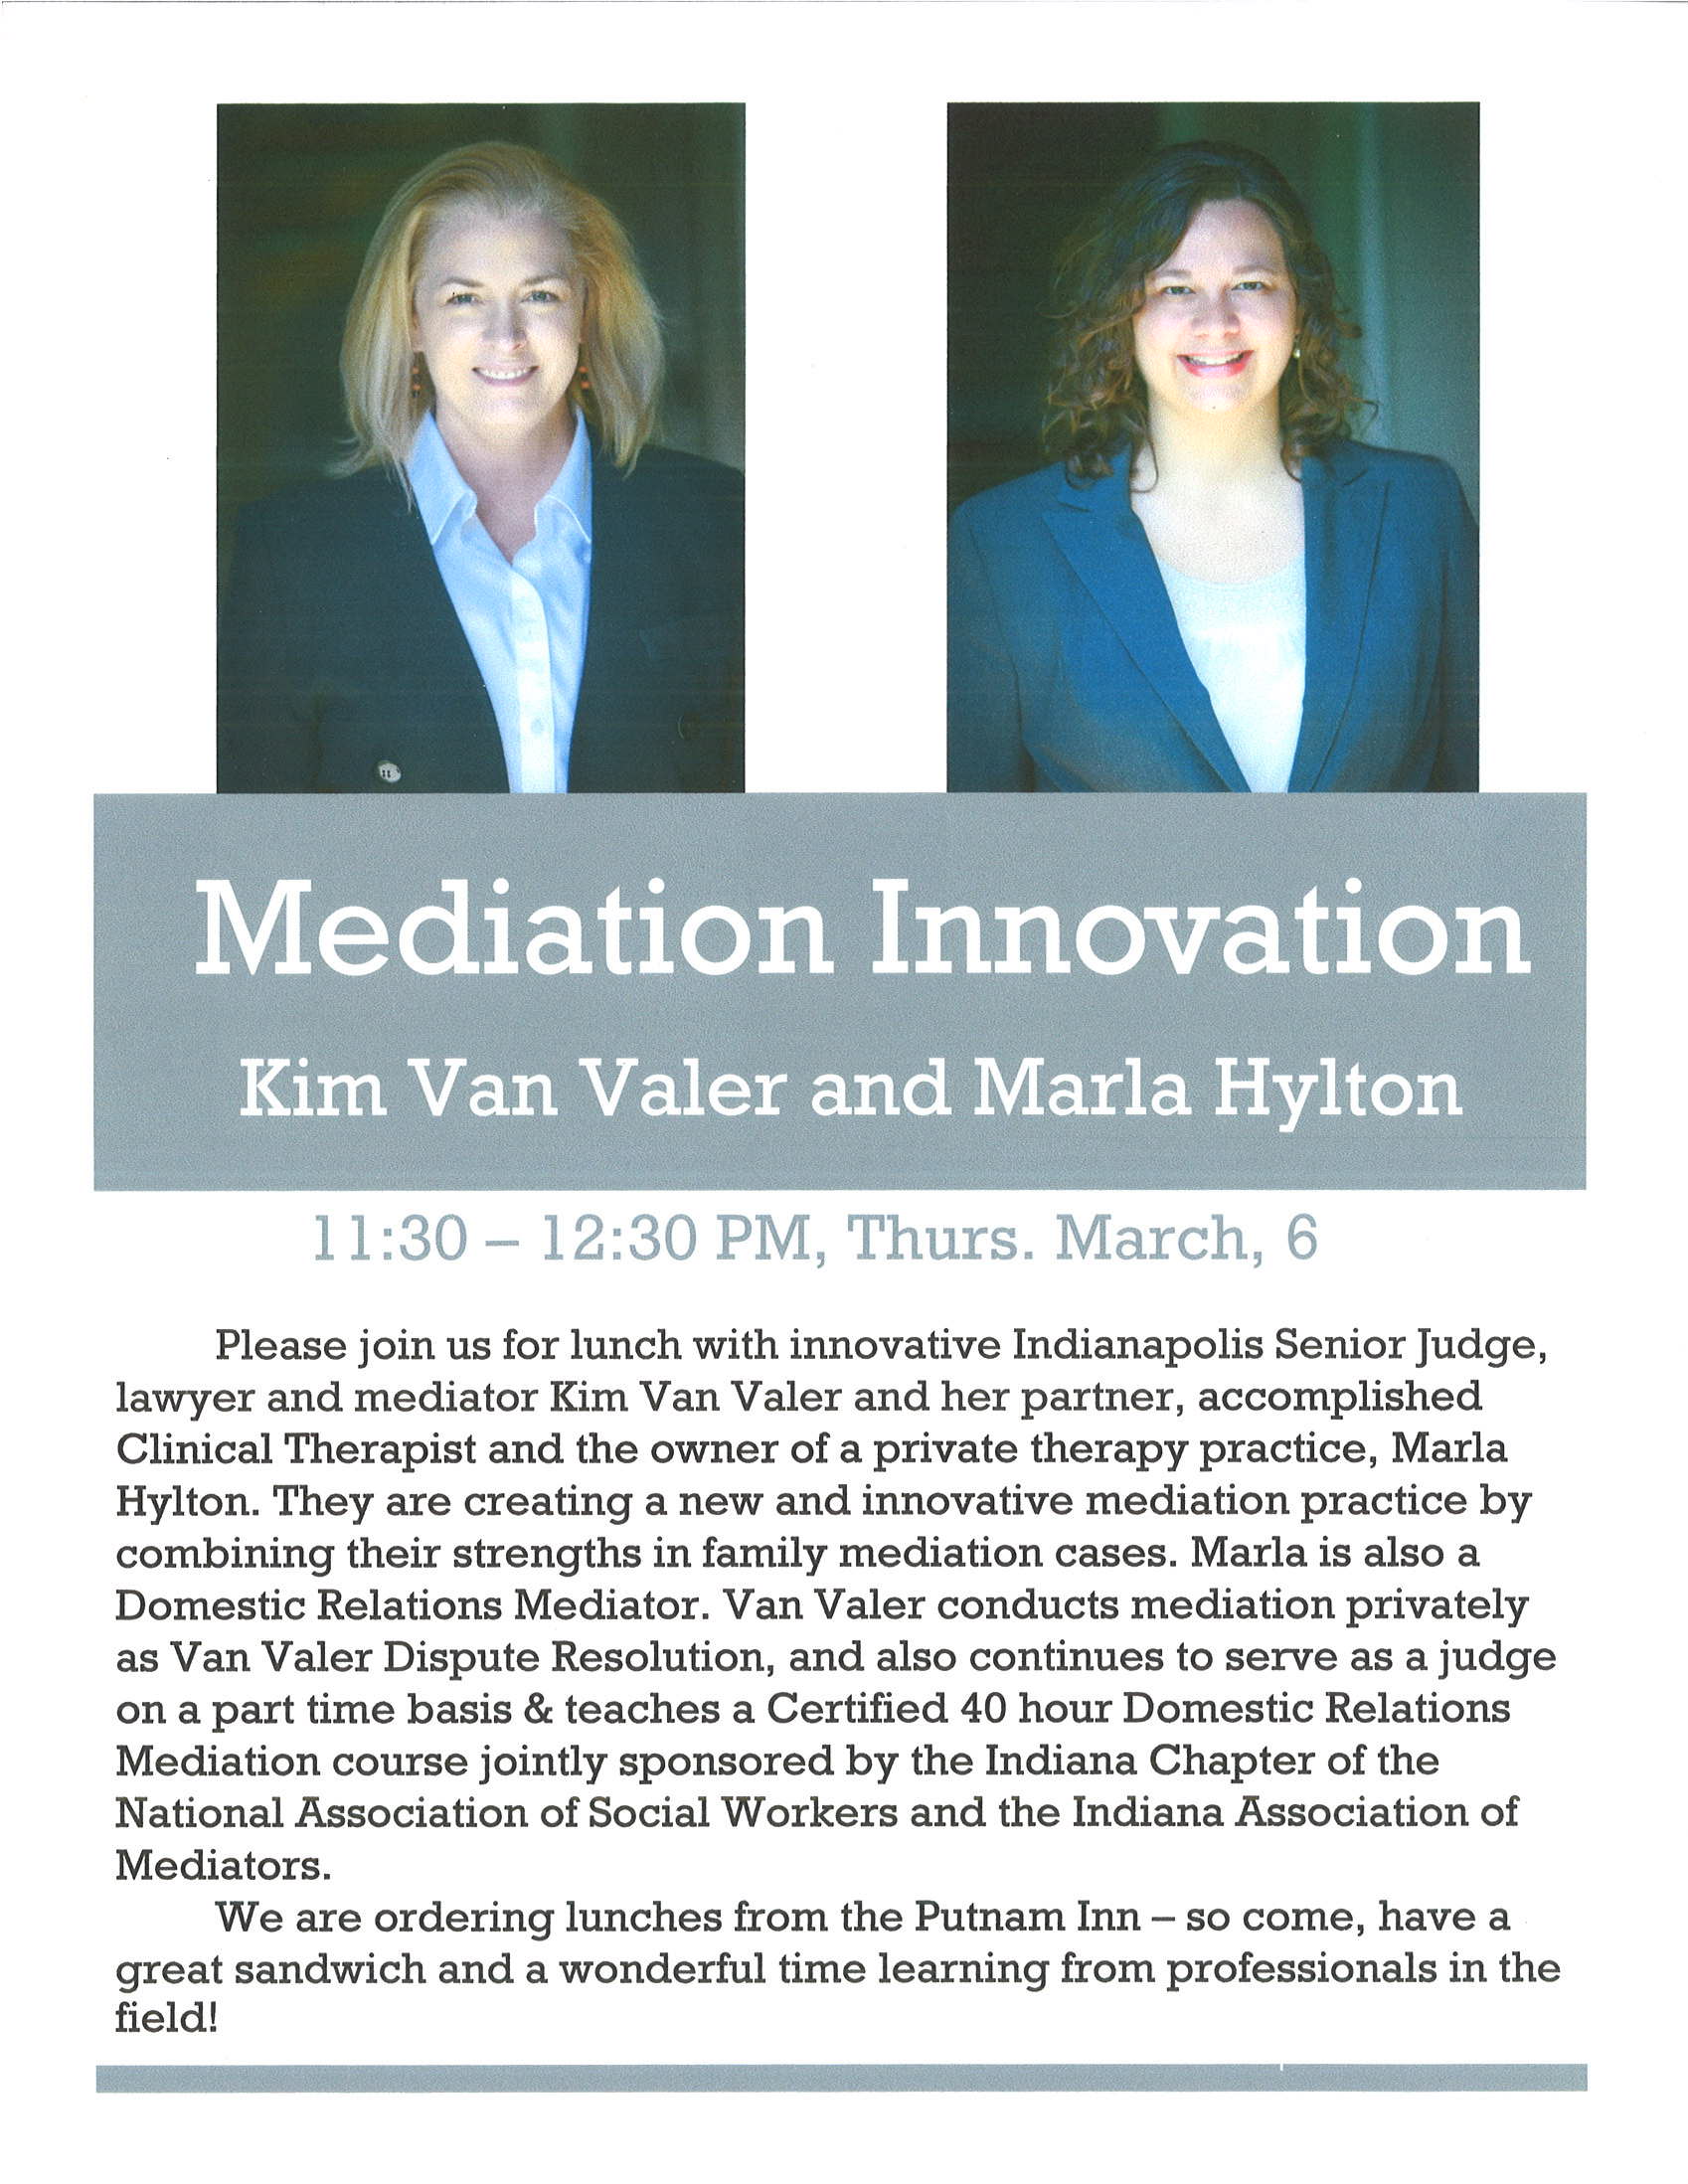 Poster for Mediation Innovation with Kim Van Valer and marla Hylton